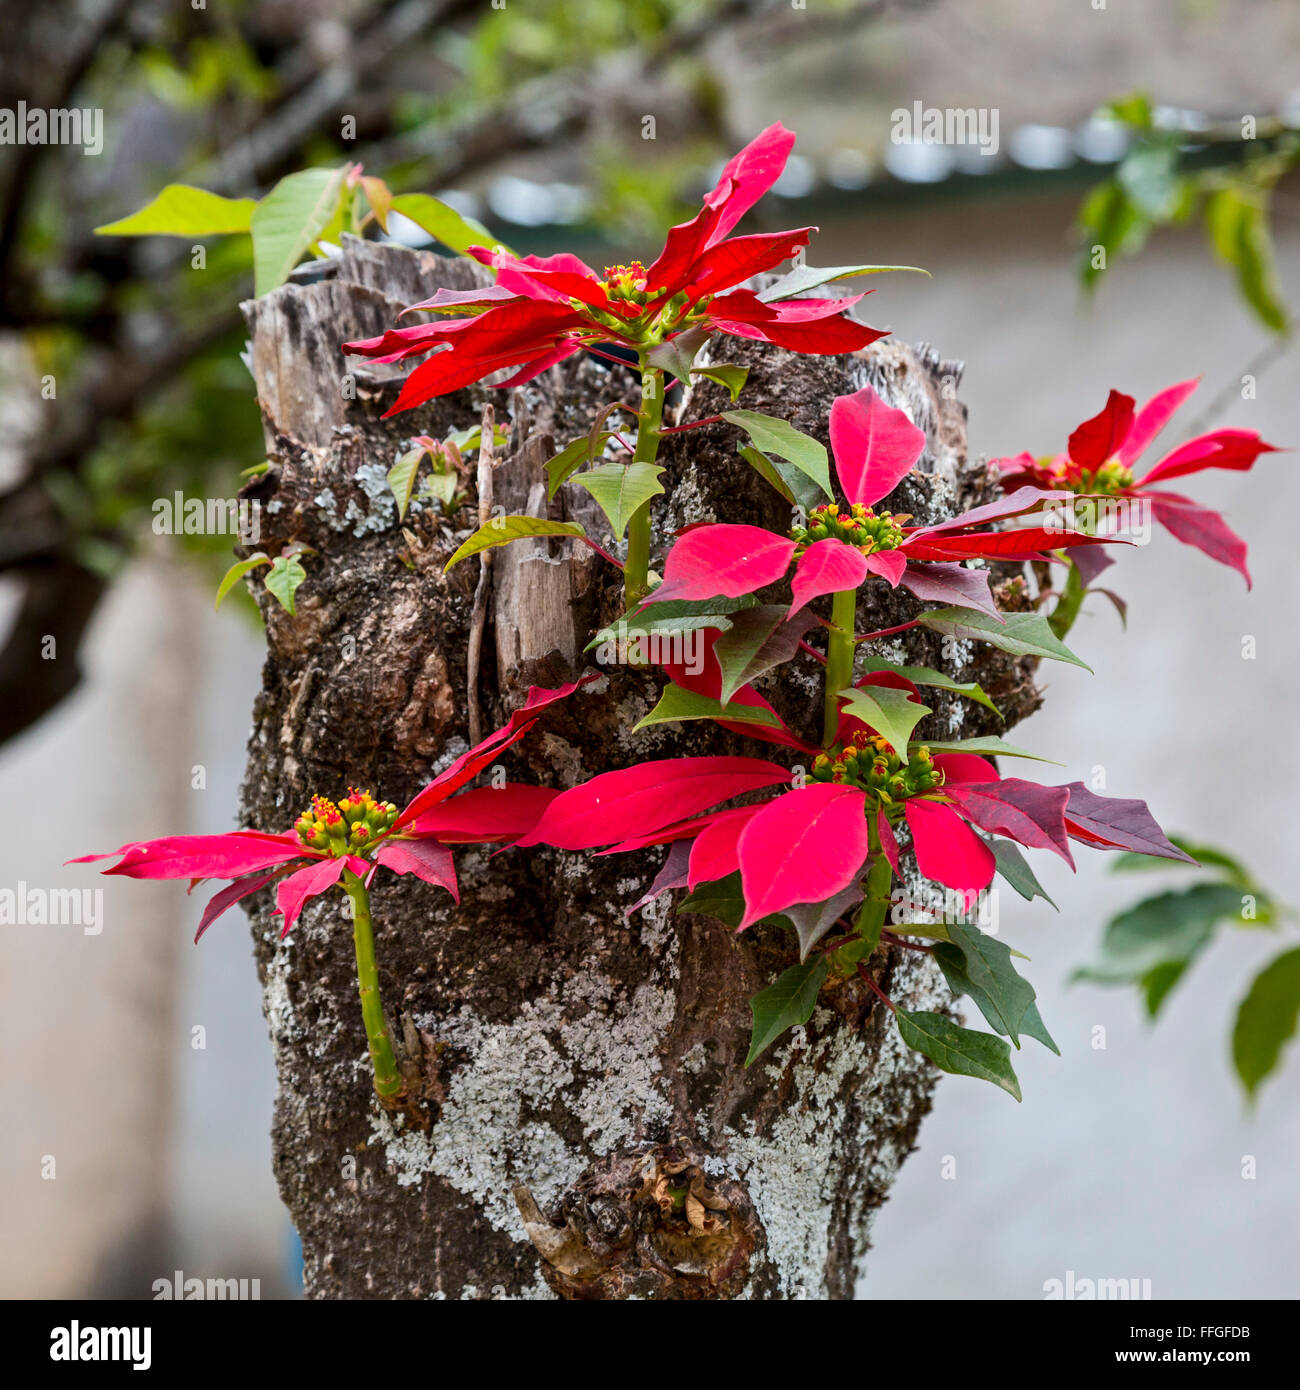 Santiago Apoala, Oaxaca, Mexico - New shoots growing from the stump of a poinsettia tree (Euphorbia pulcherrima). Stock Photo